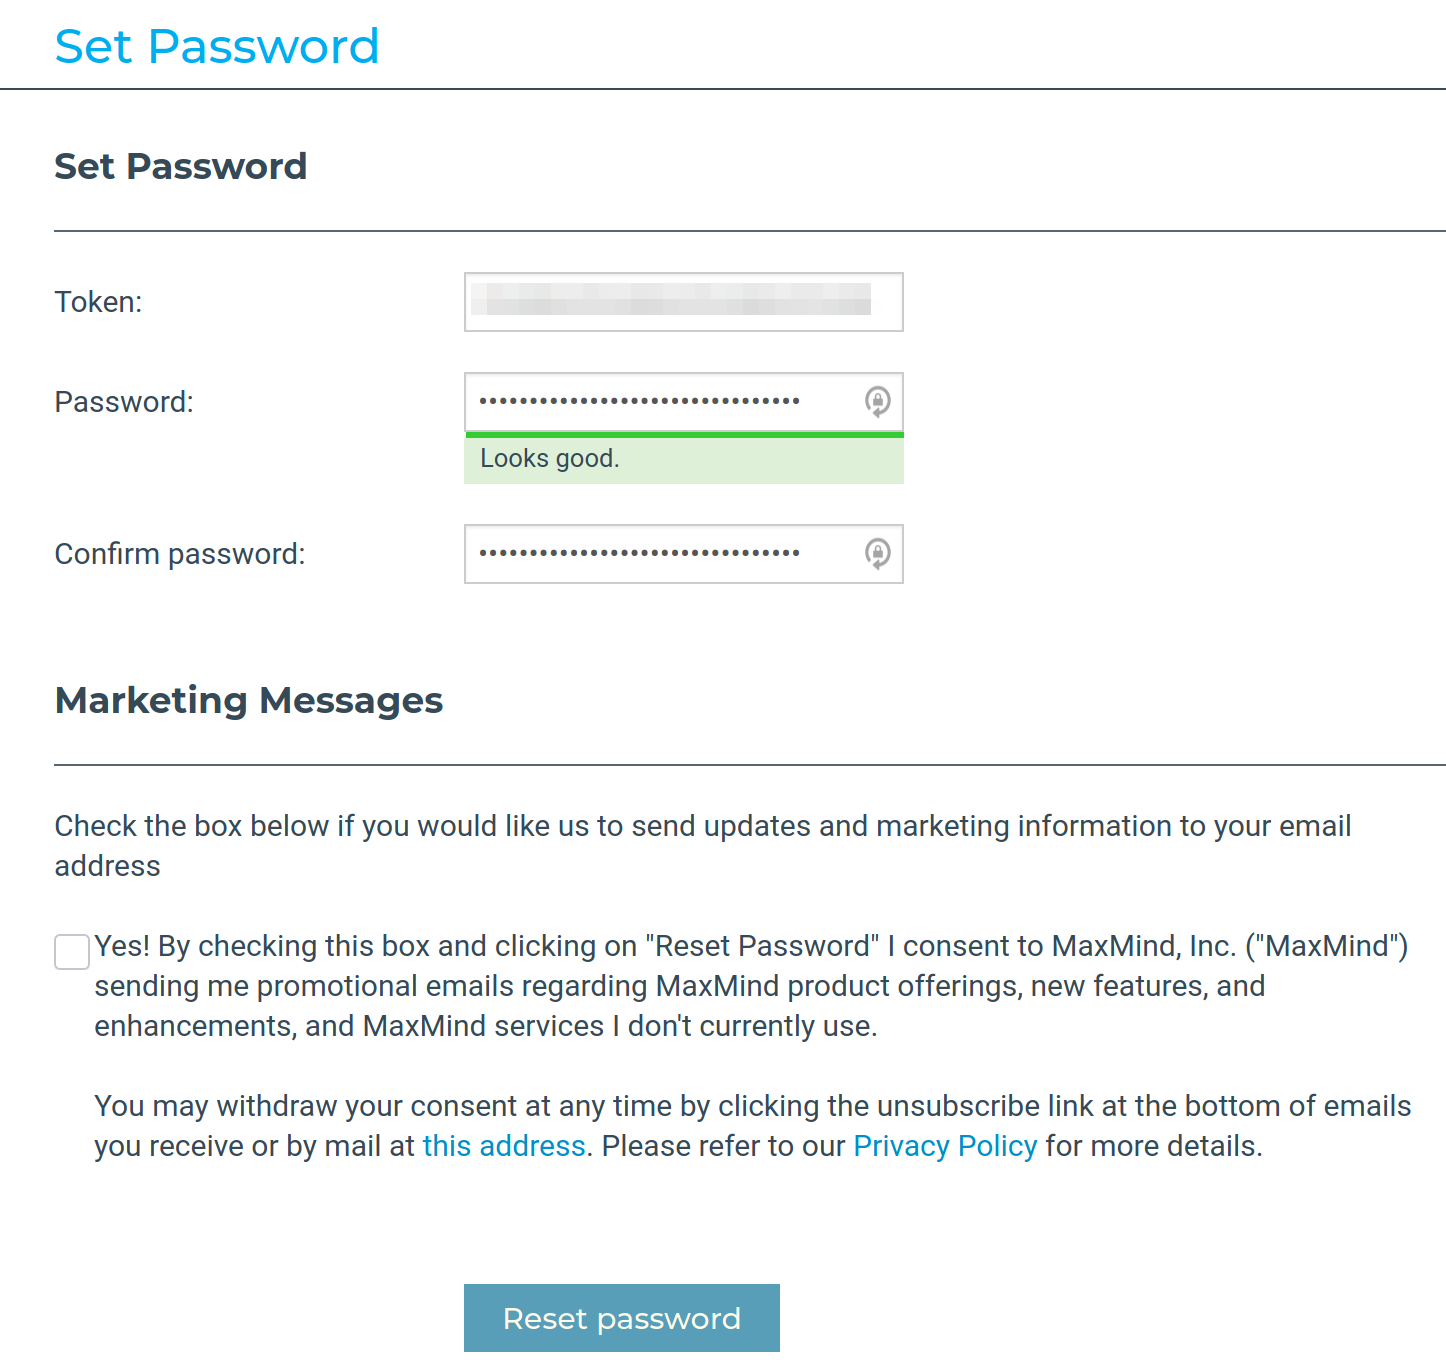 MaxMind set password form